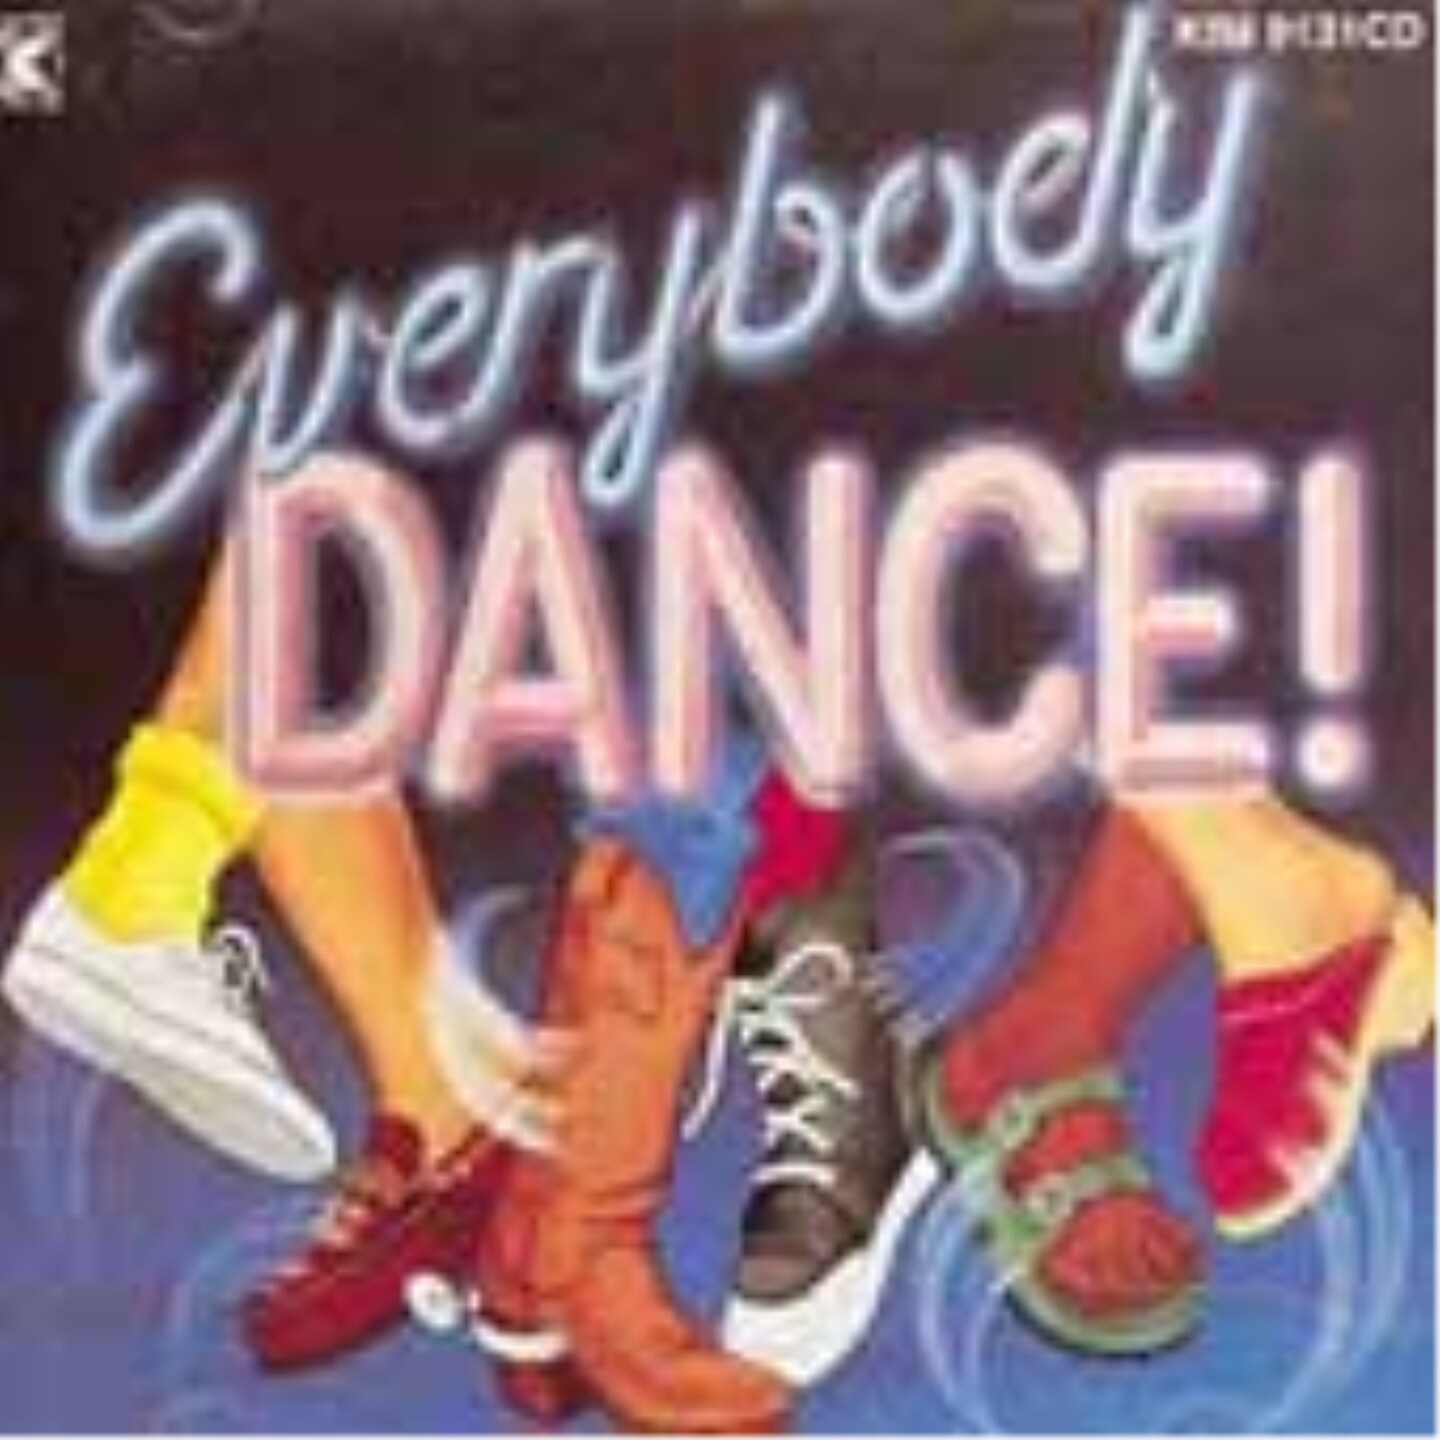 Everybody Dance Educational CD